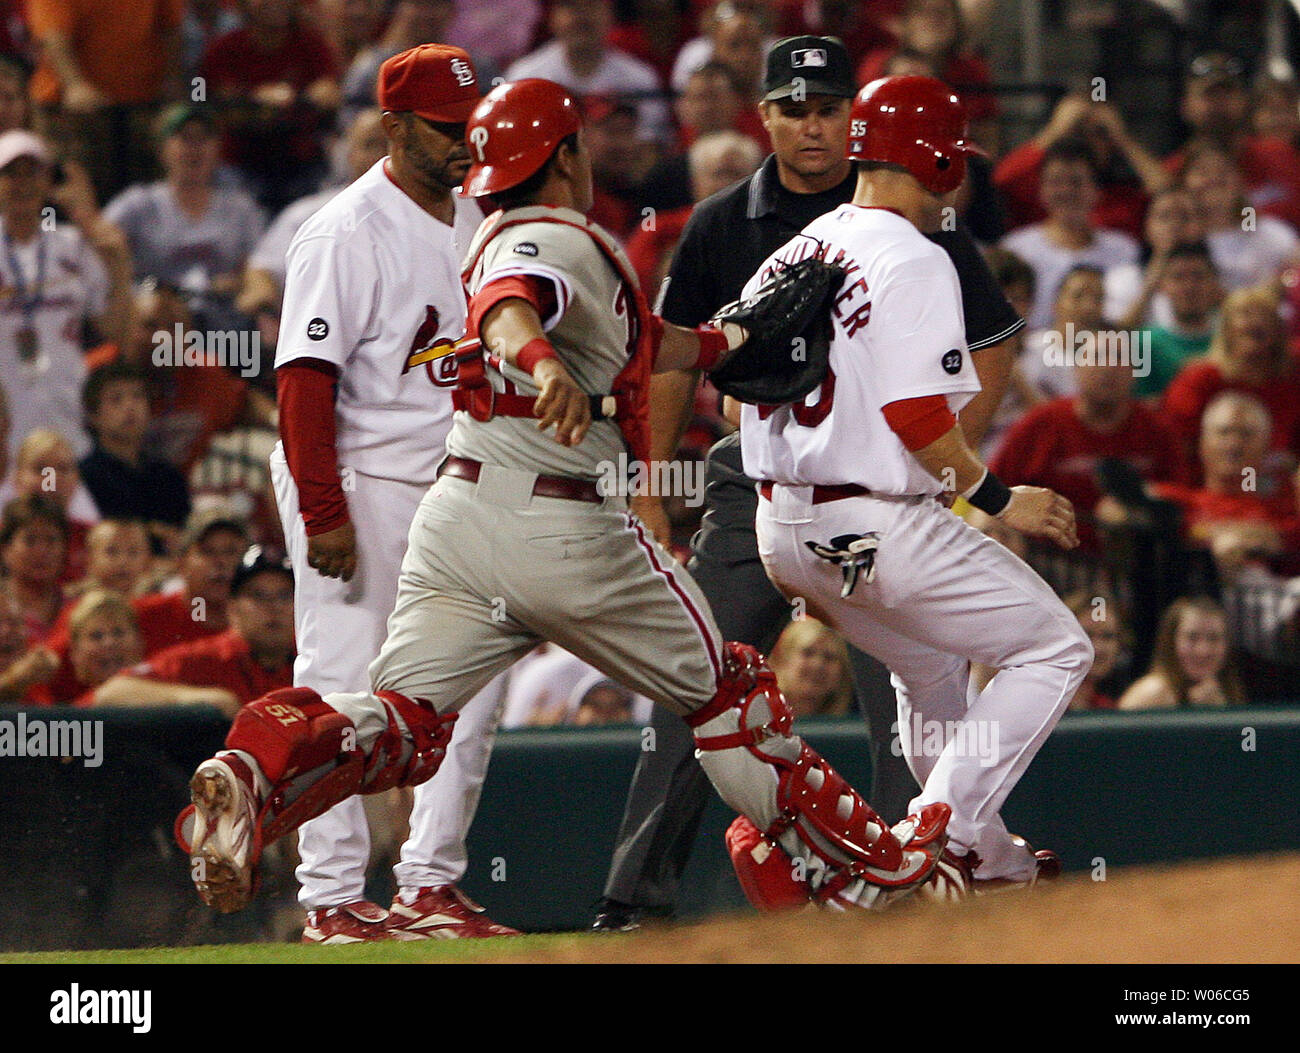 Philadelphia Phillies catcher Carlos Ruiz (L) tags out Cardinals